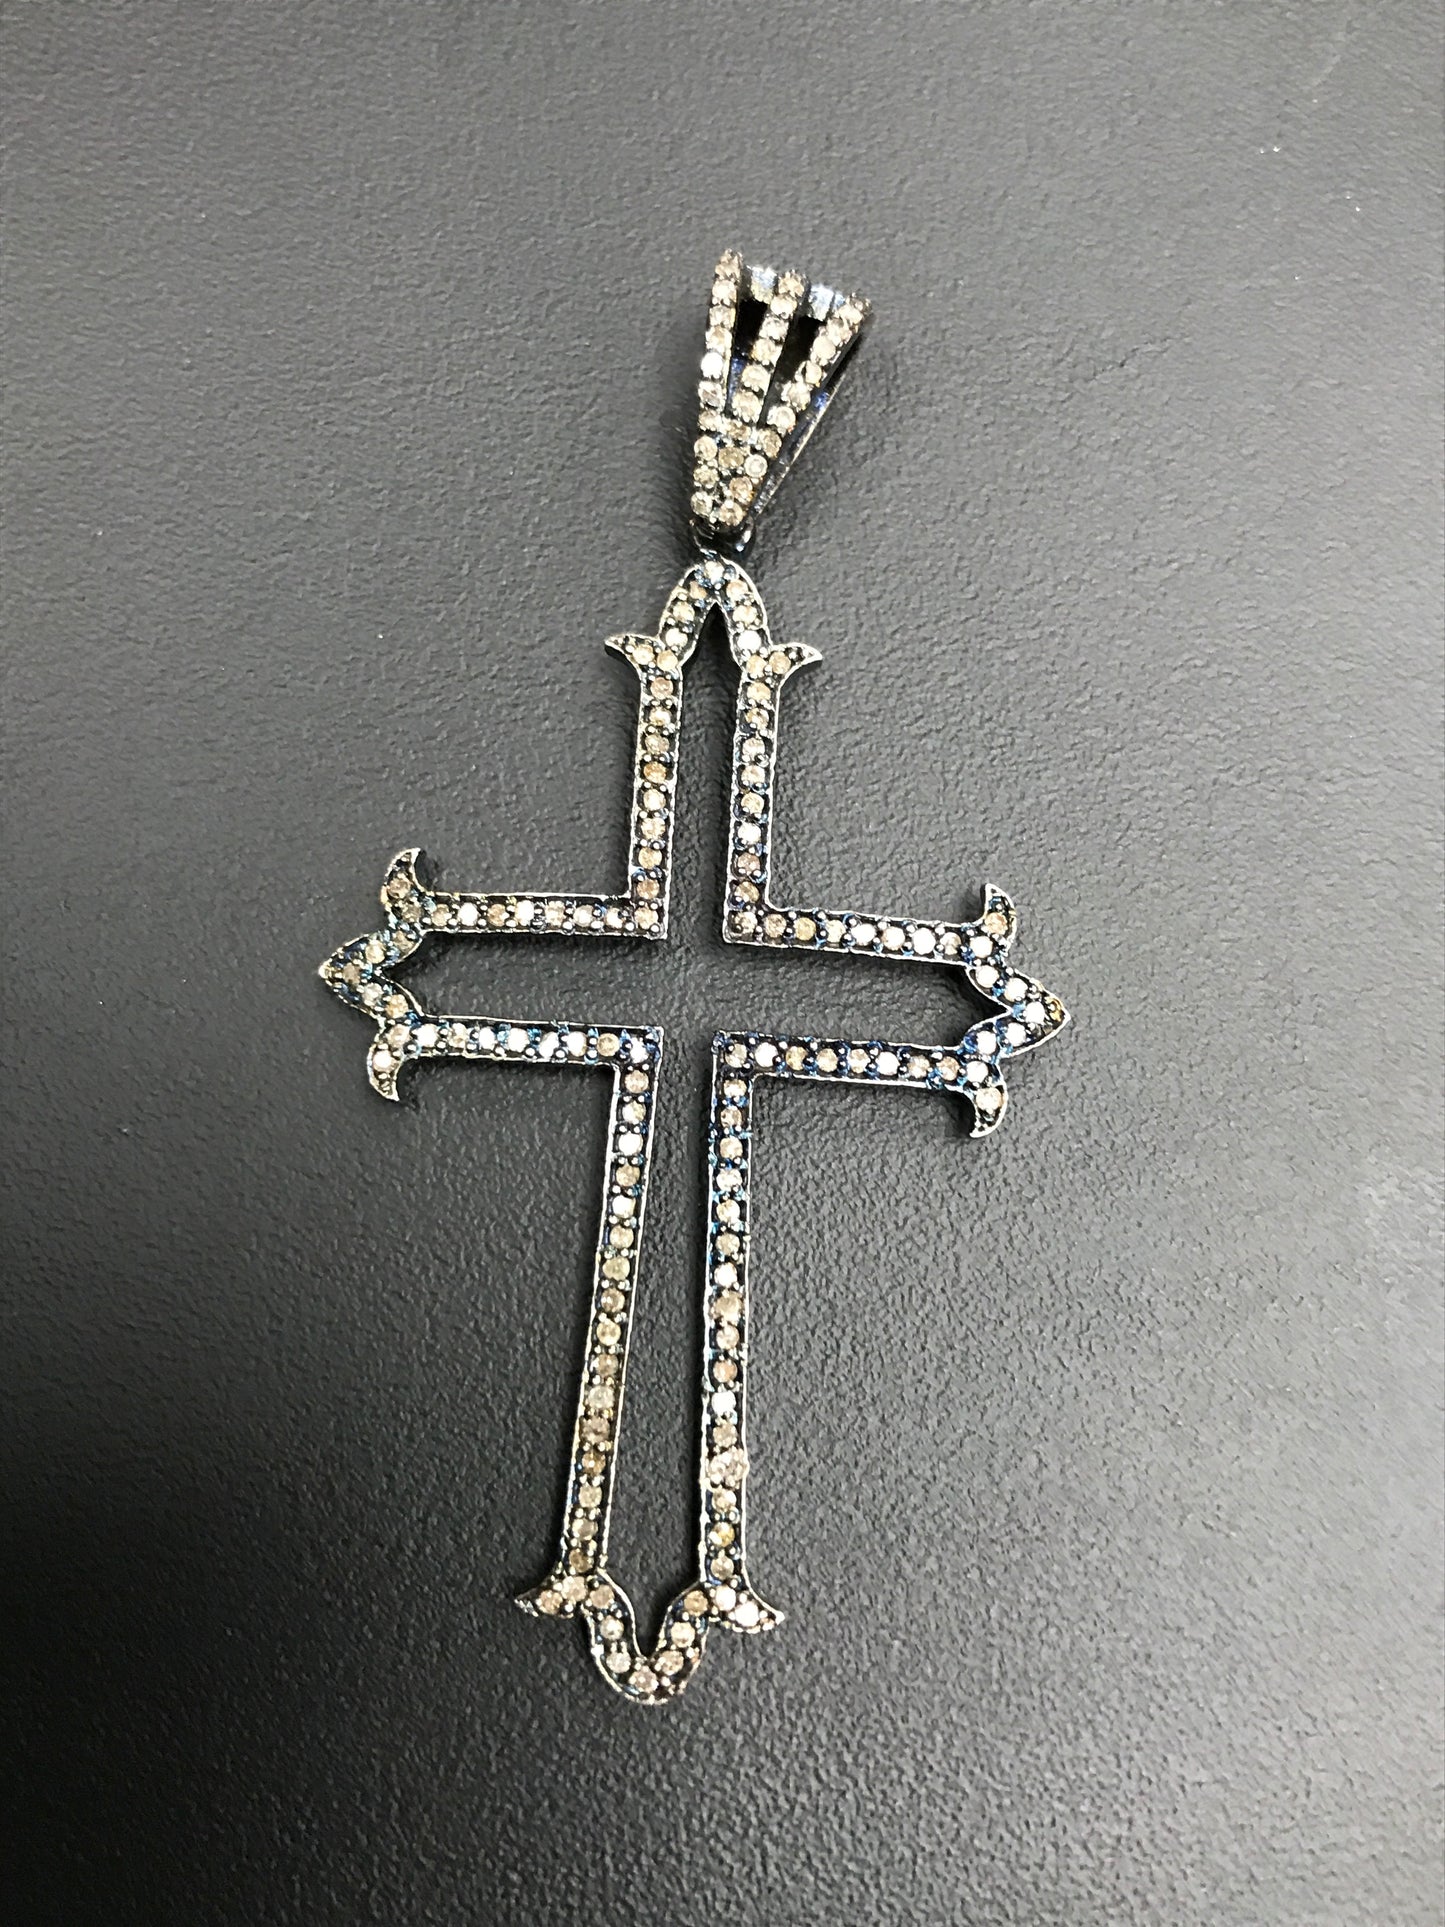 Diamond Gothic Cross Diamond Pendant, Pave Diamond Pendant, Gothic Cross Necklace, Approx 64 x 35mm. Sterling Silver